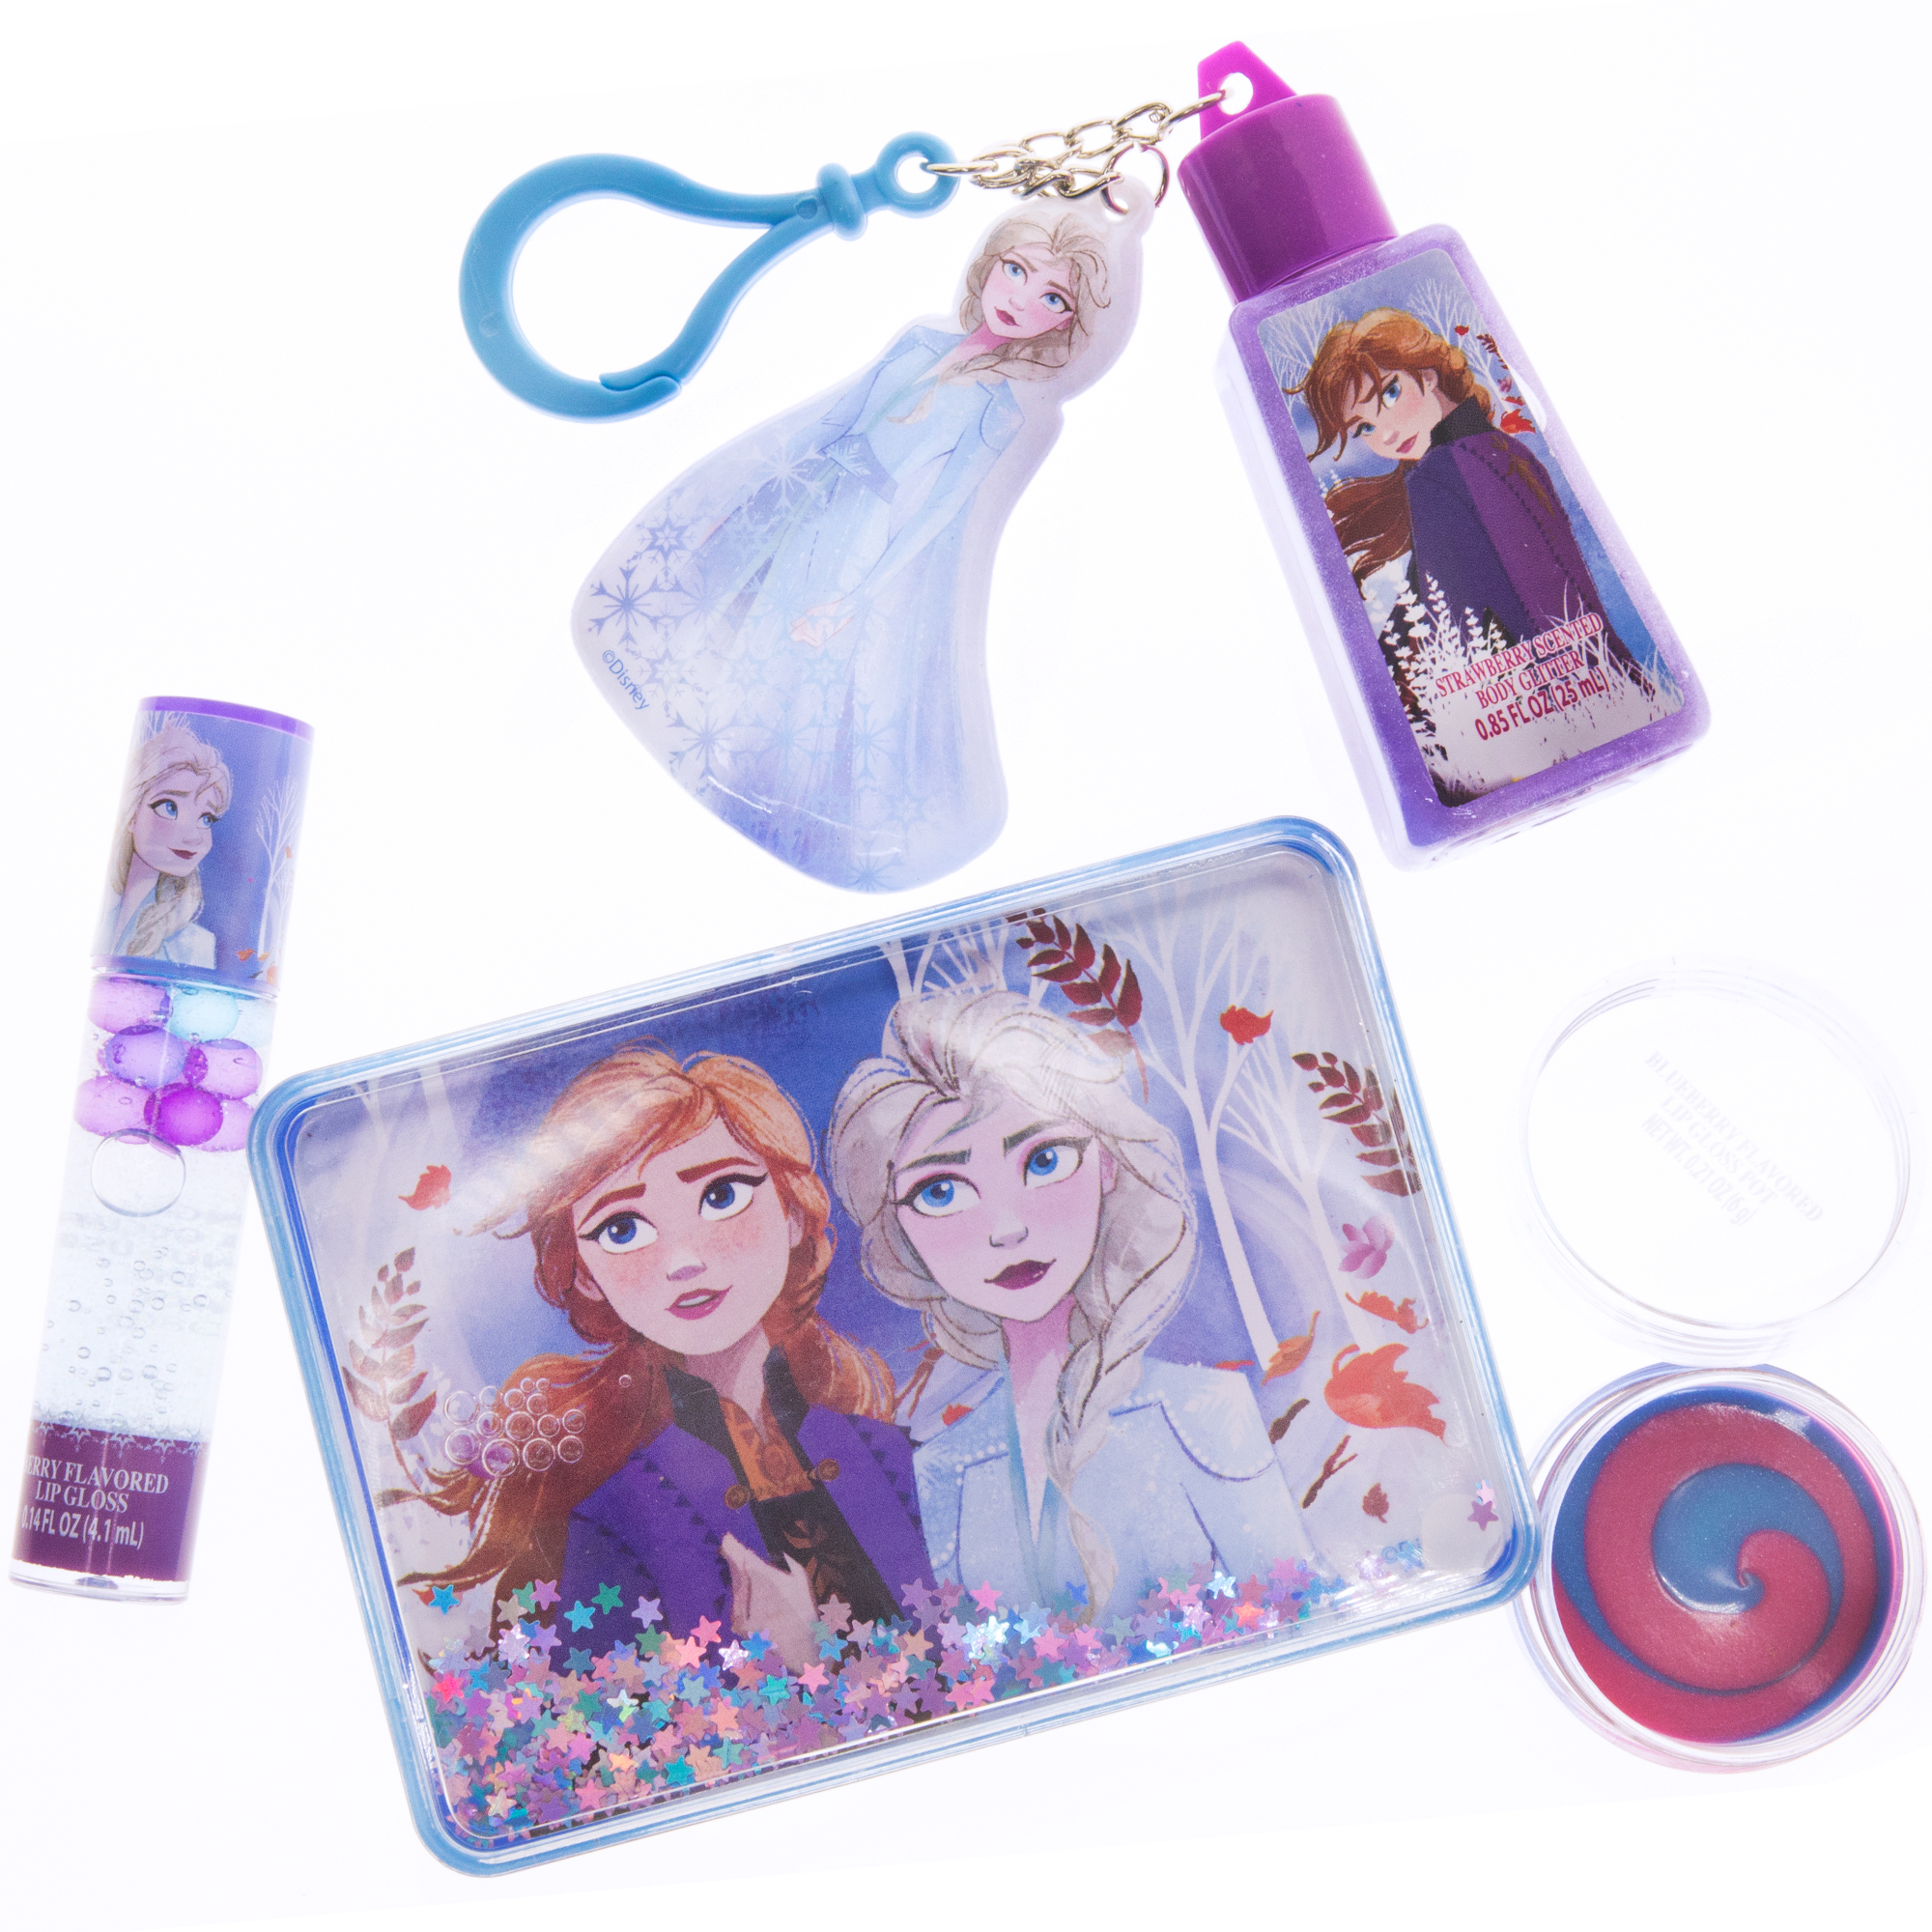 Disney Frozen ll Snow Box Gift Set - image 2 of 4